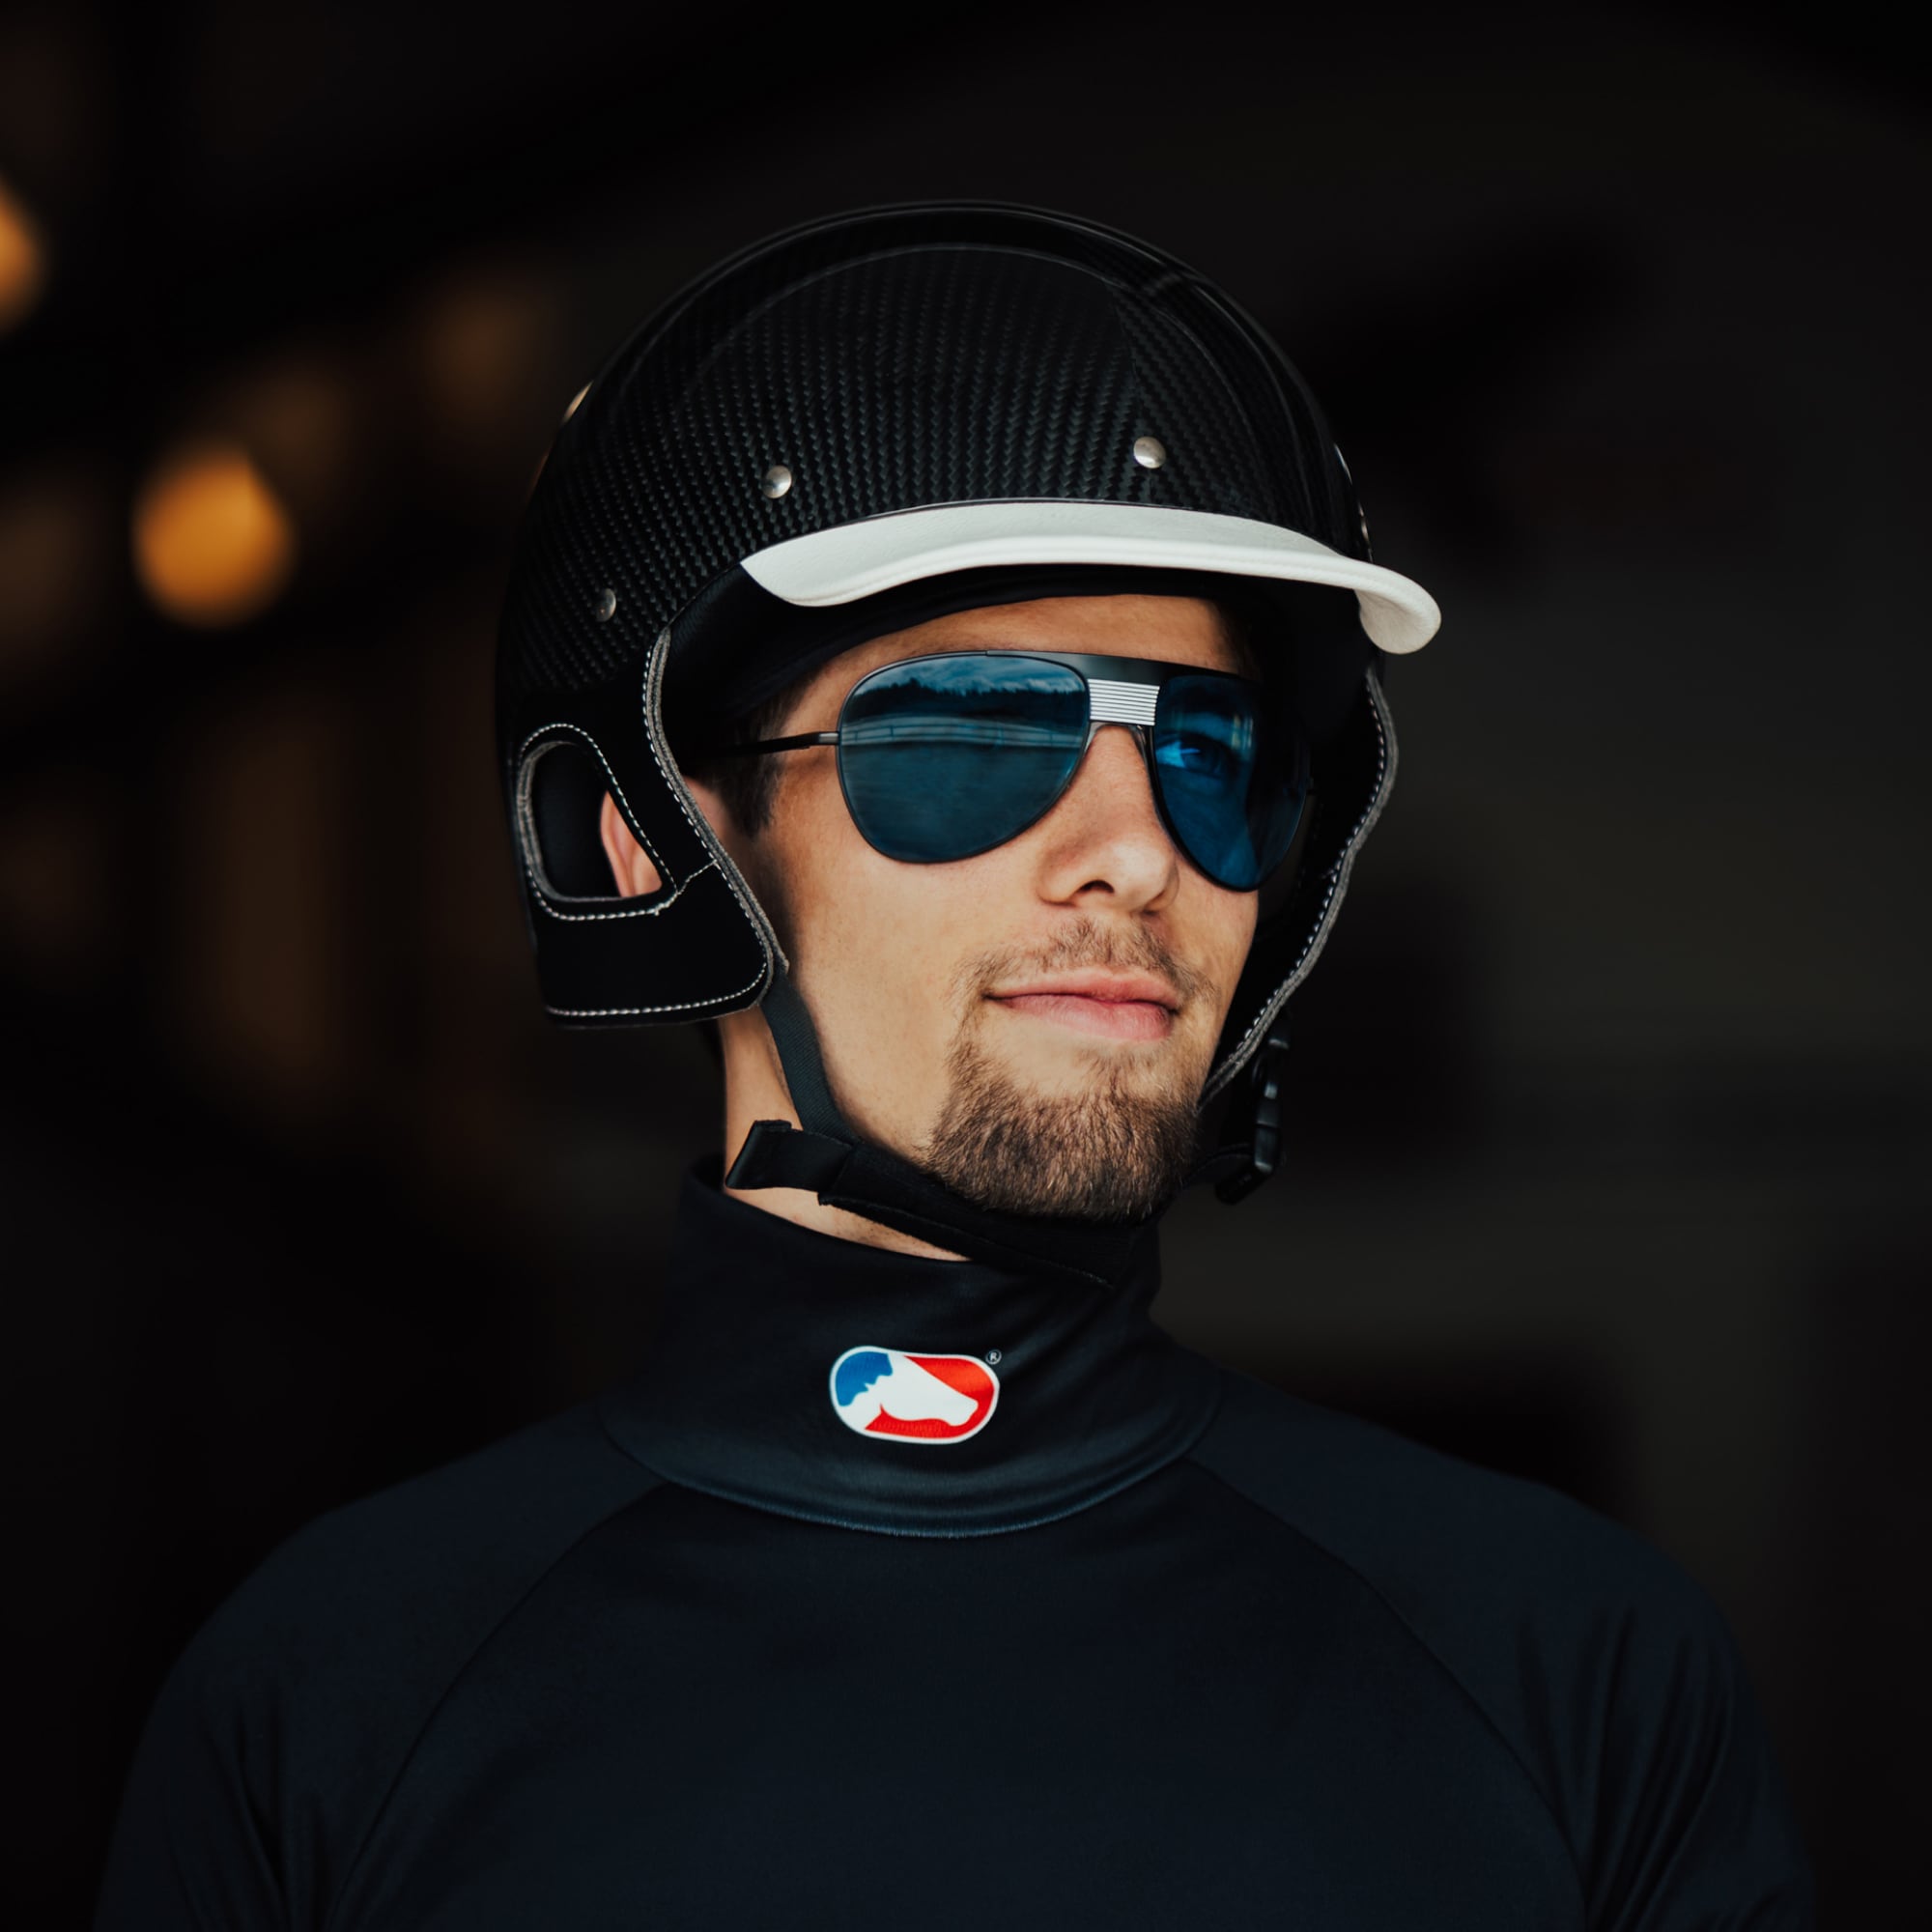 Finntack Elite Carbon Fiber Helmet